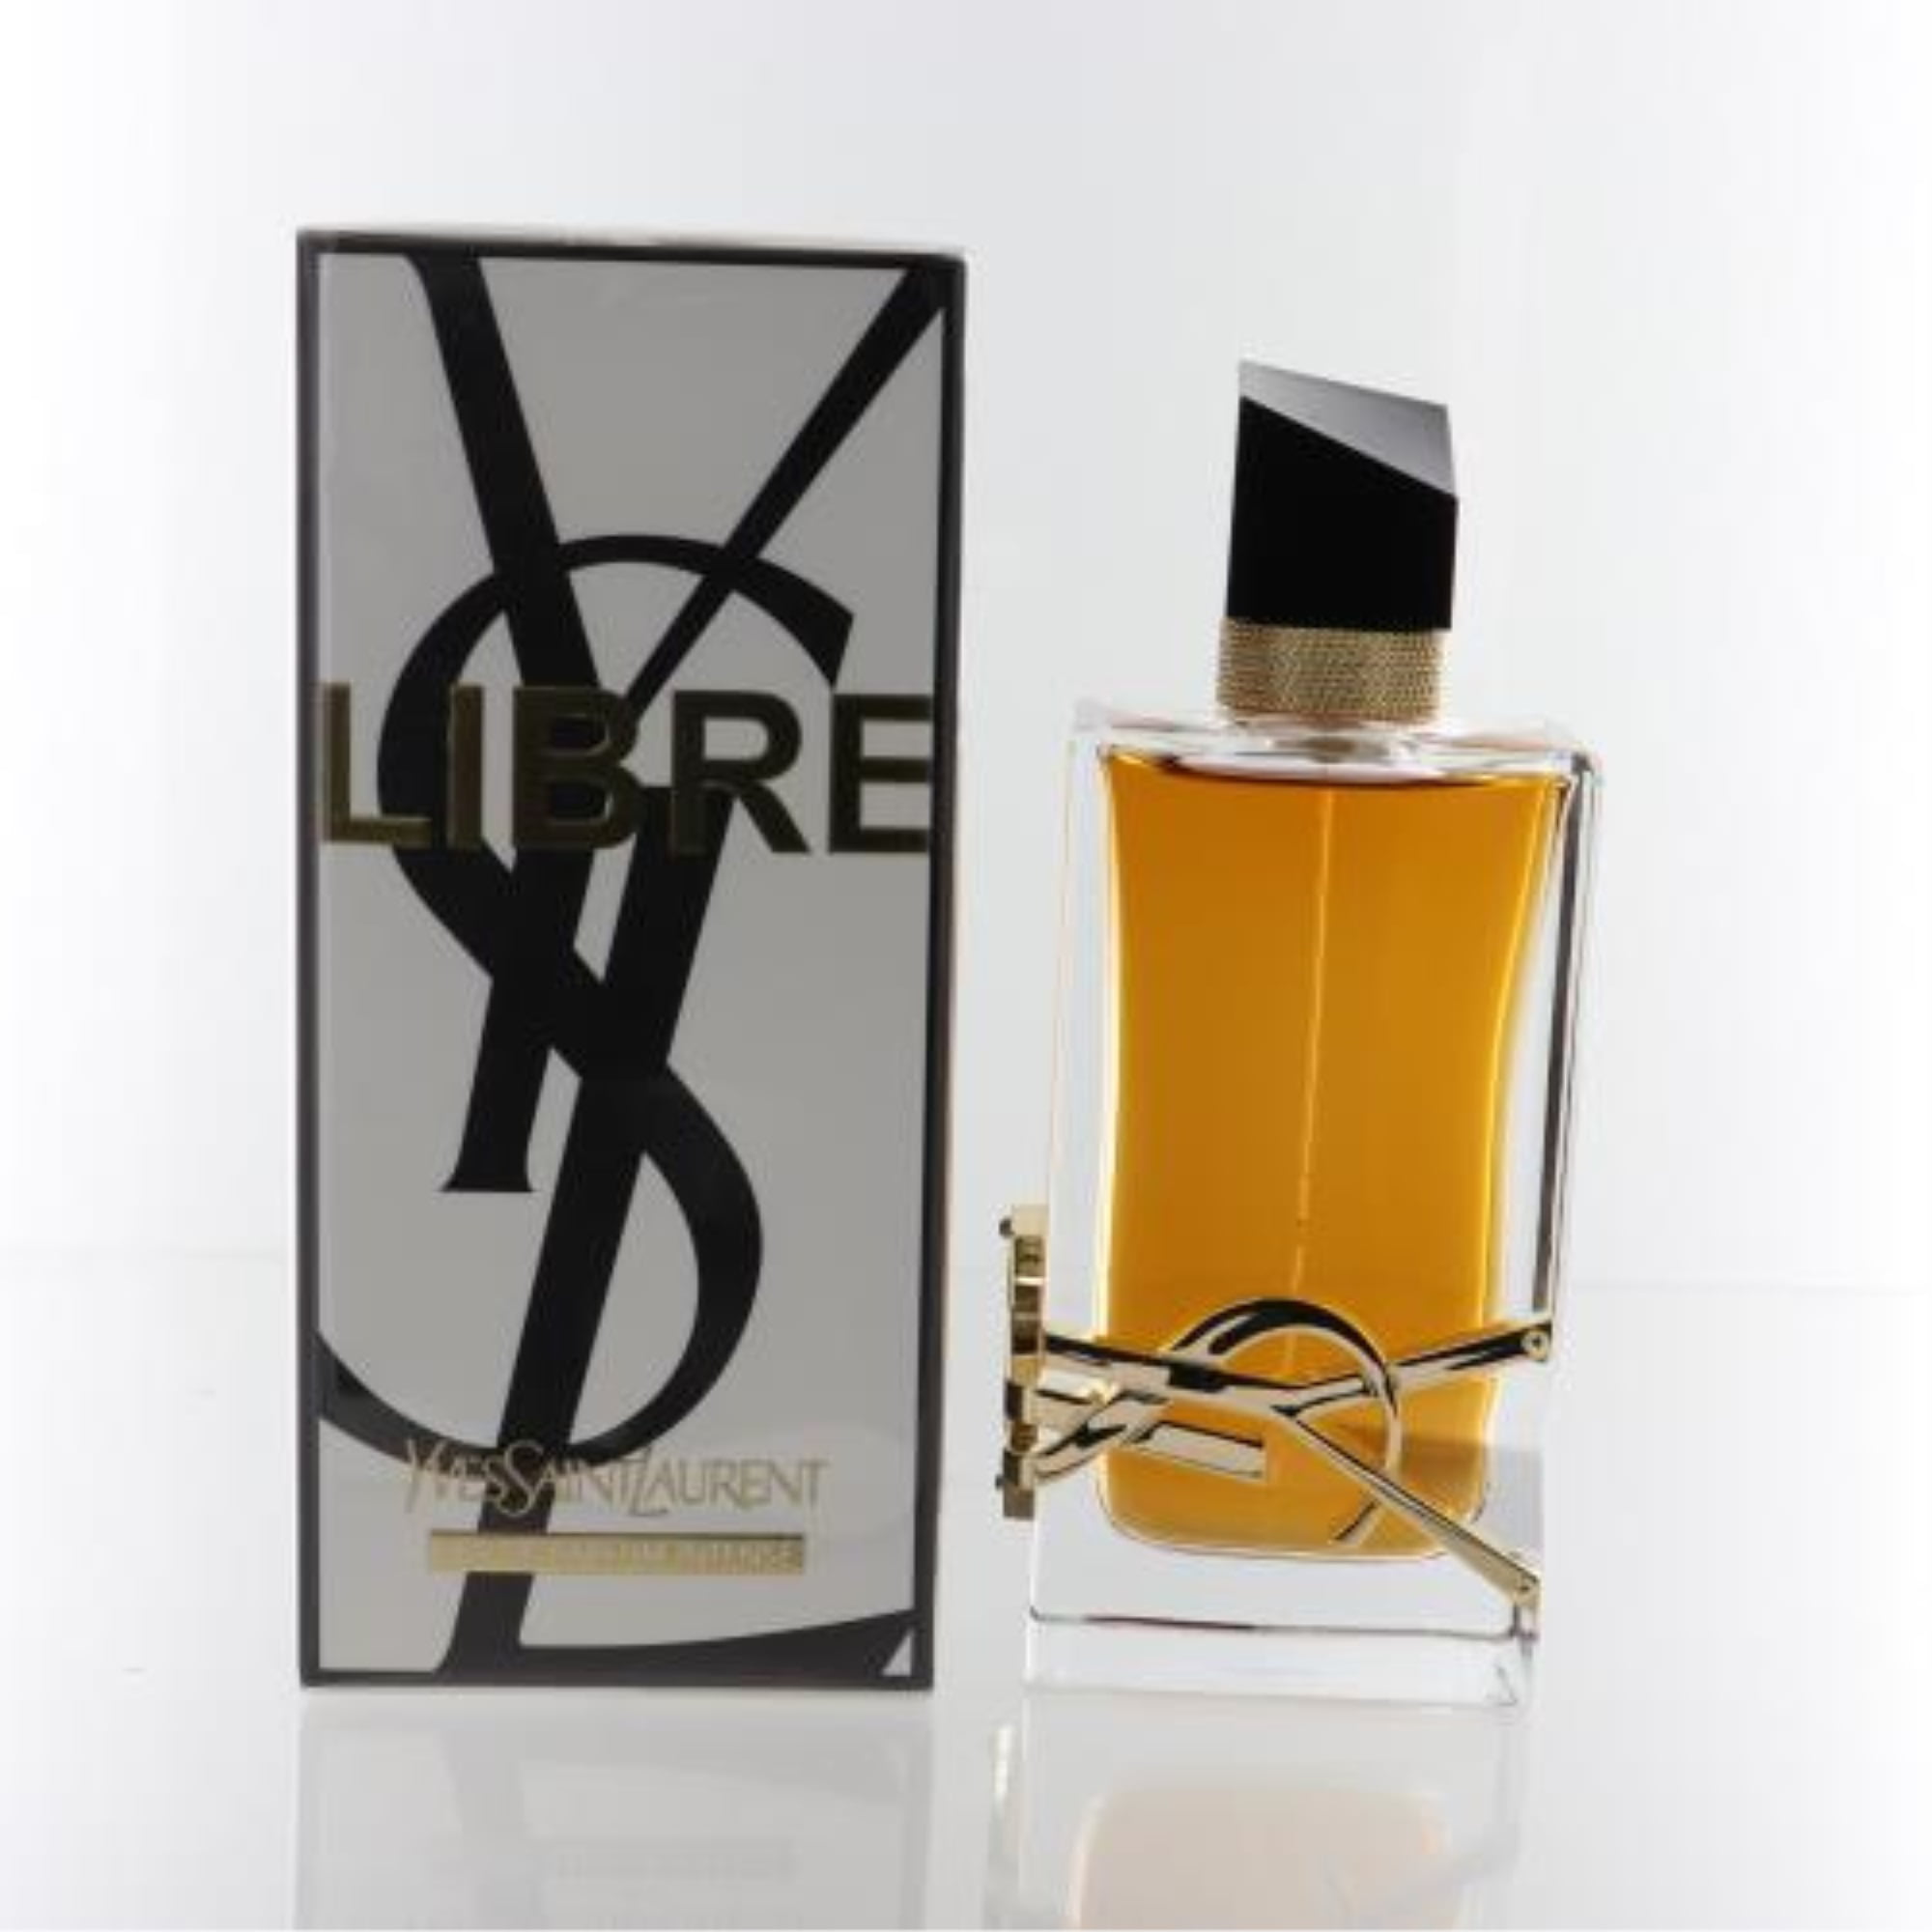 Ysl libre parfum Shop Yves